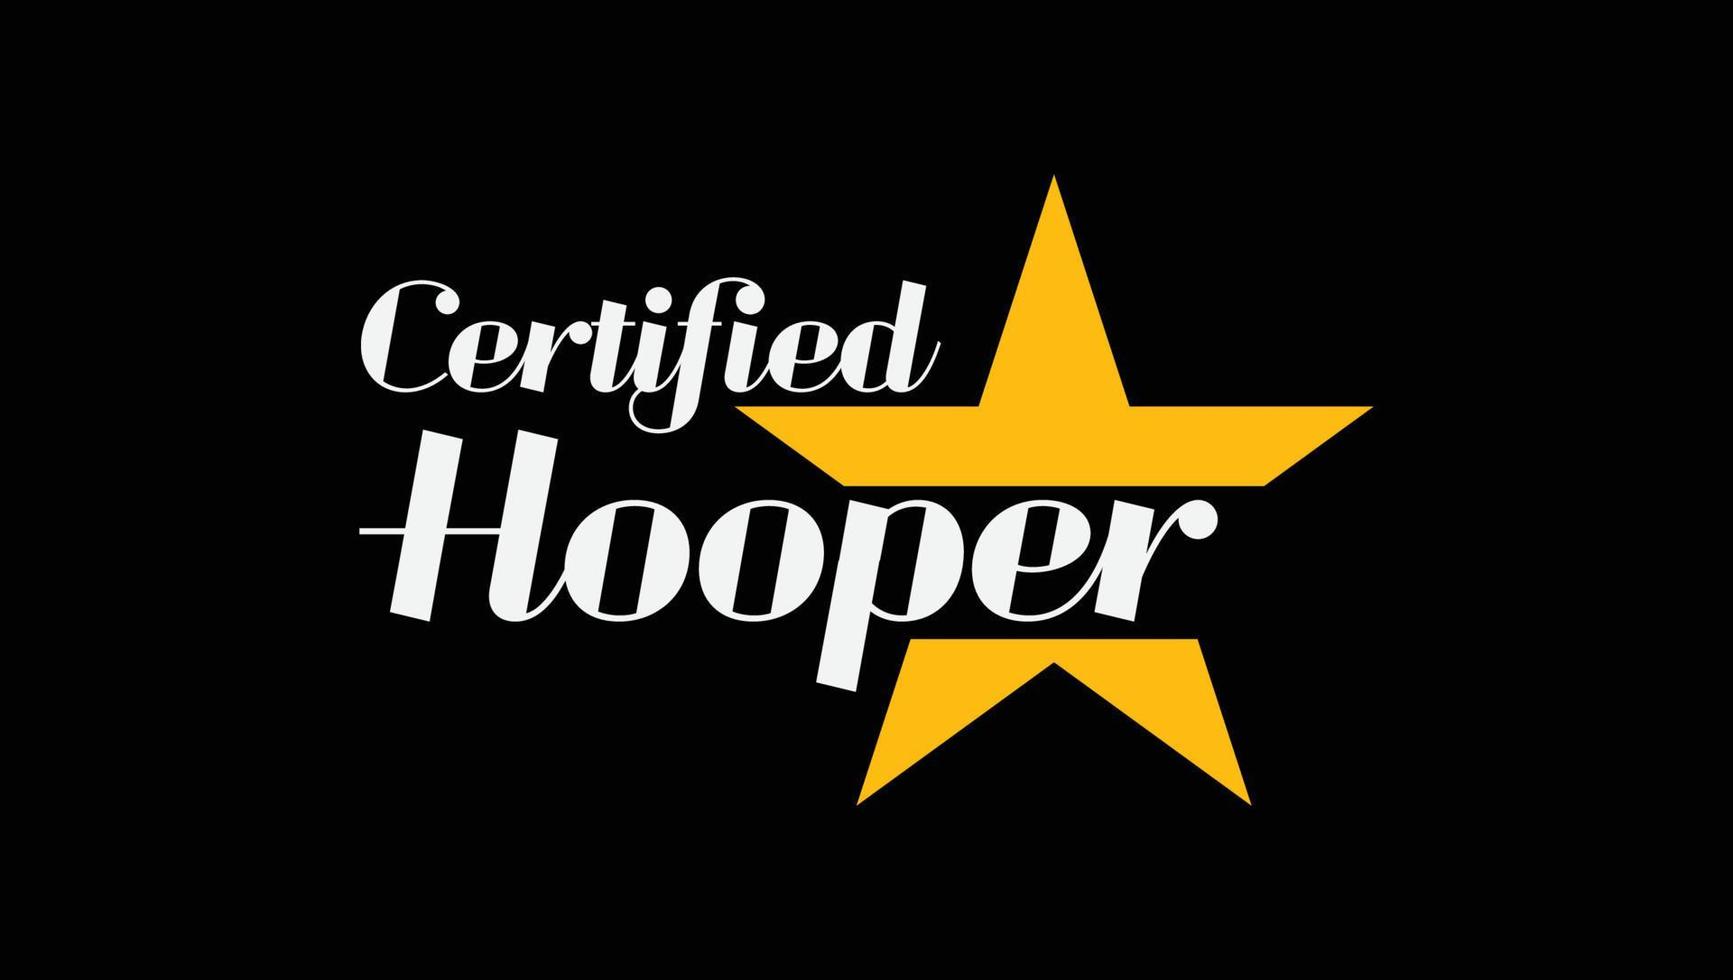 Certified Hooper Custom Designed Typographic T-shirts Apparel Hoodie vector